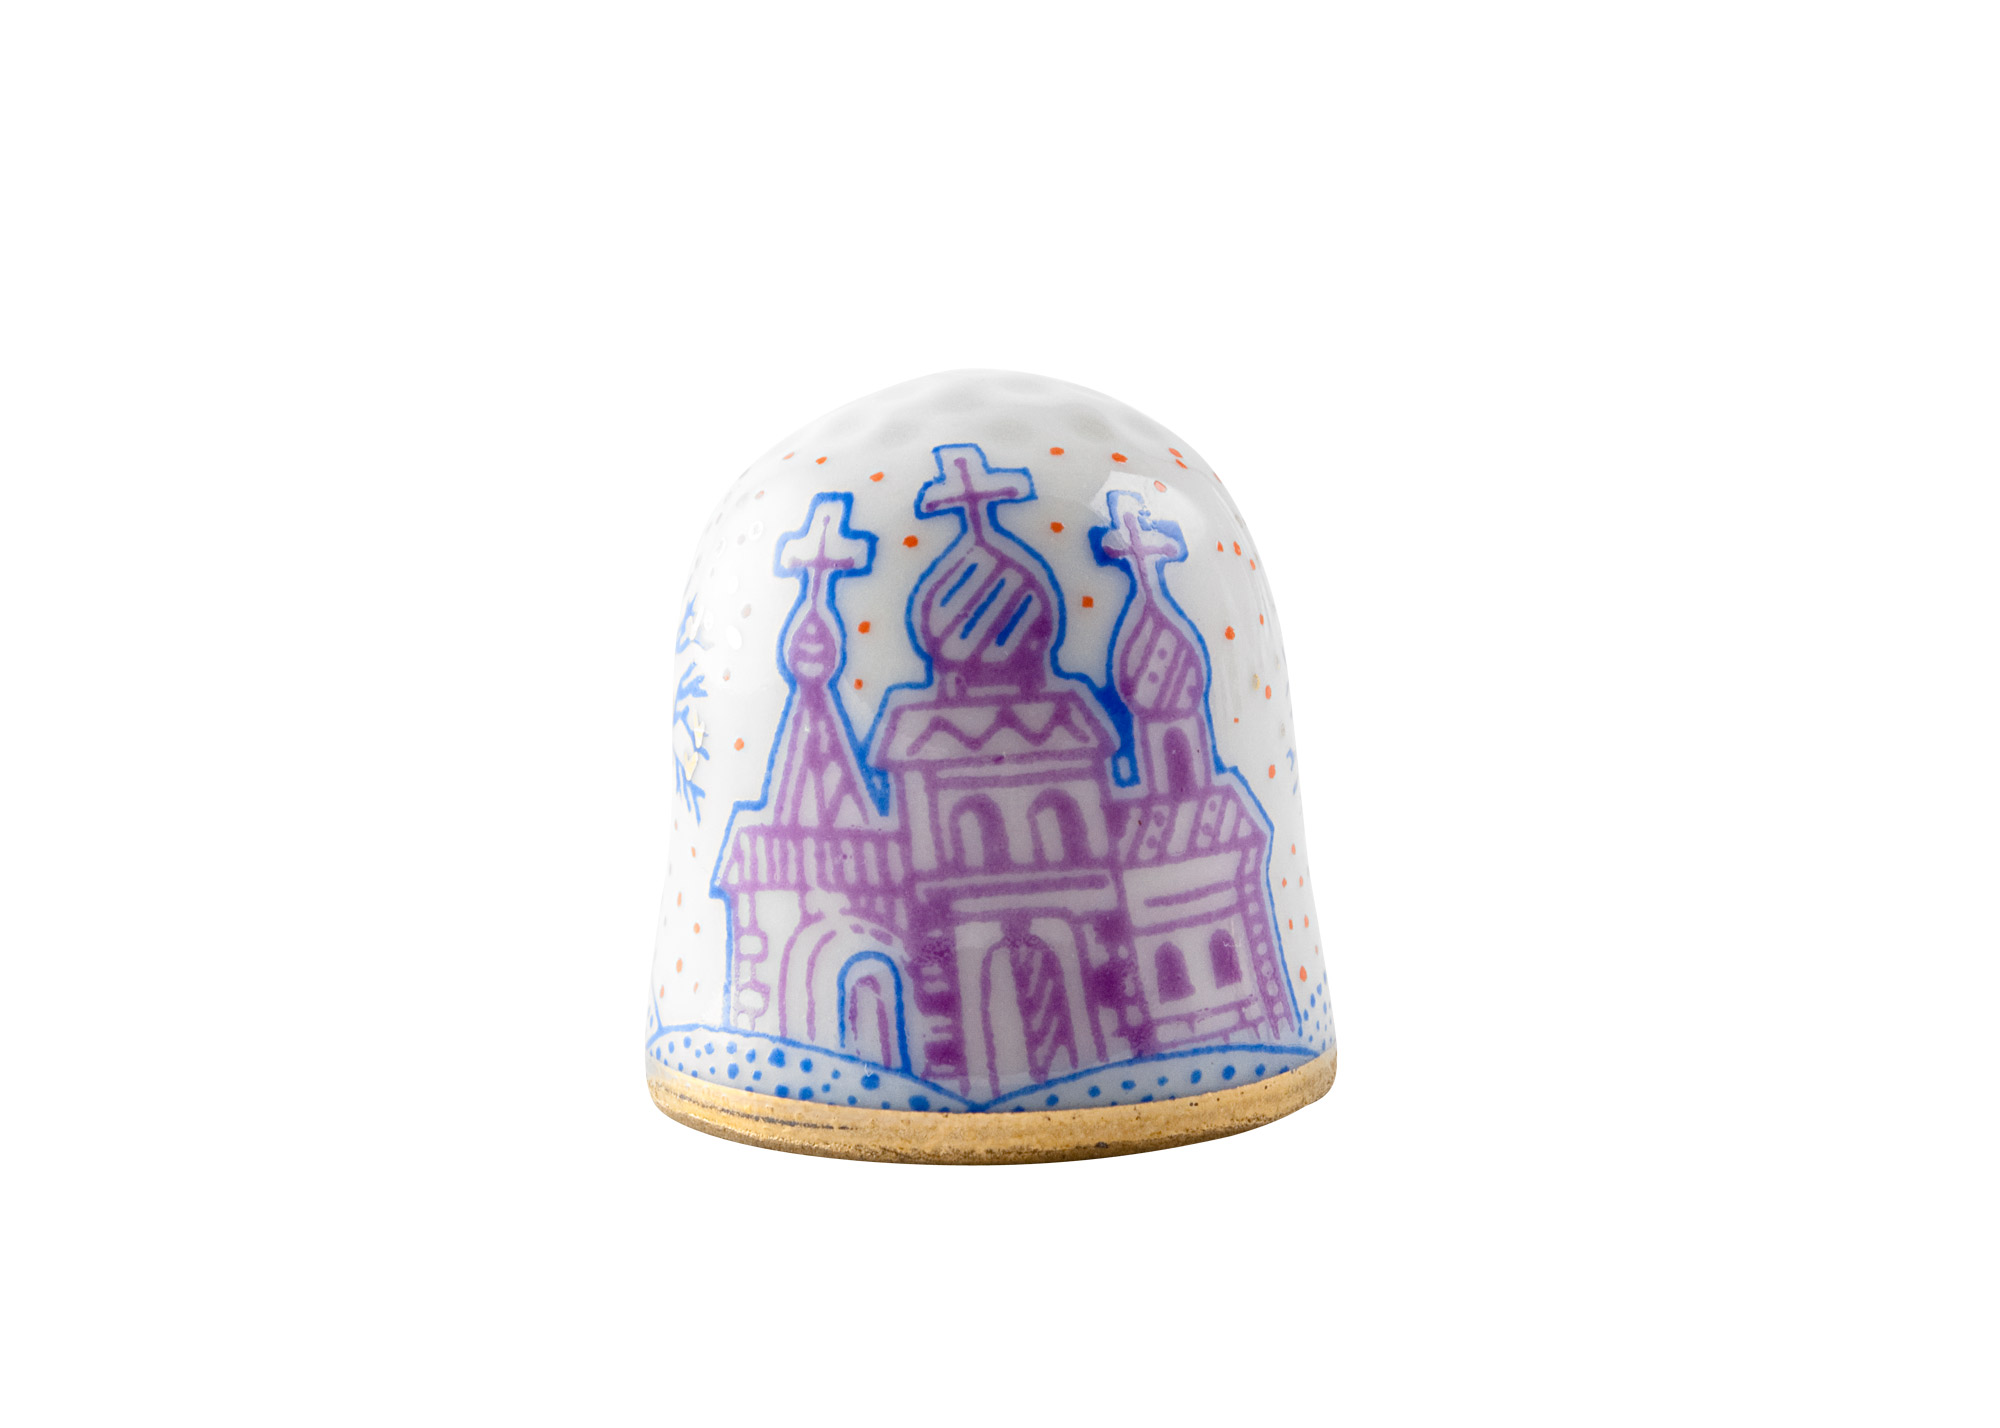 Buy Cathedral Porcelain Thimble at GoldenCockerel.com